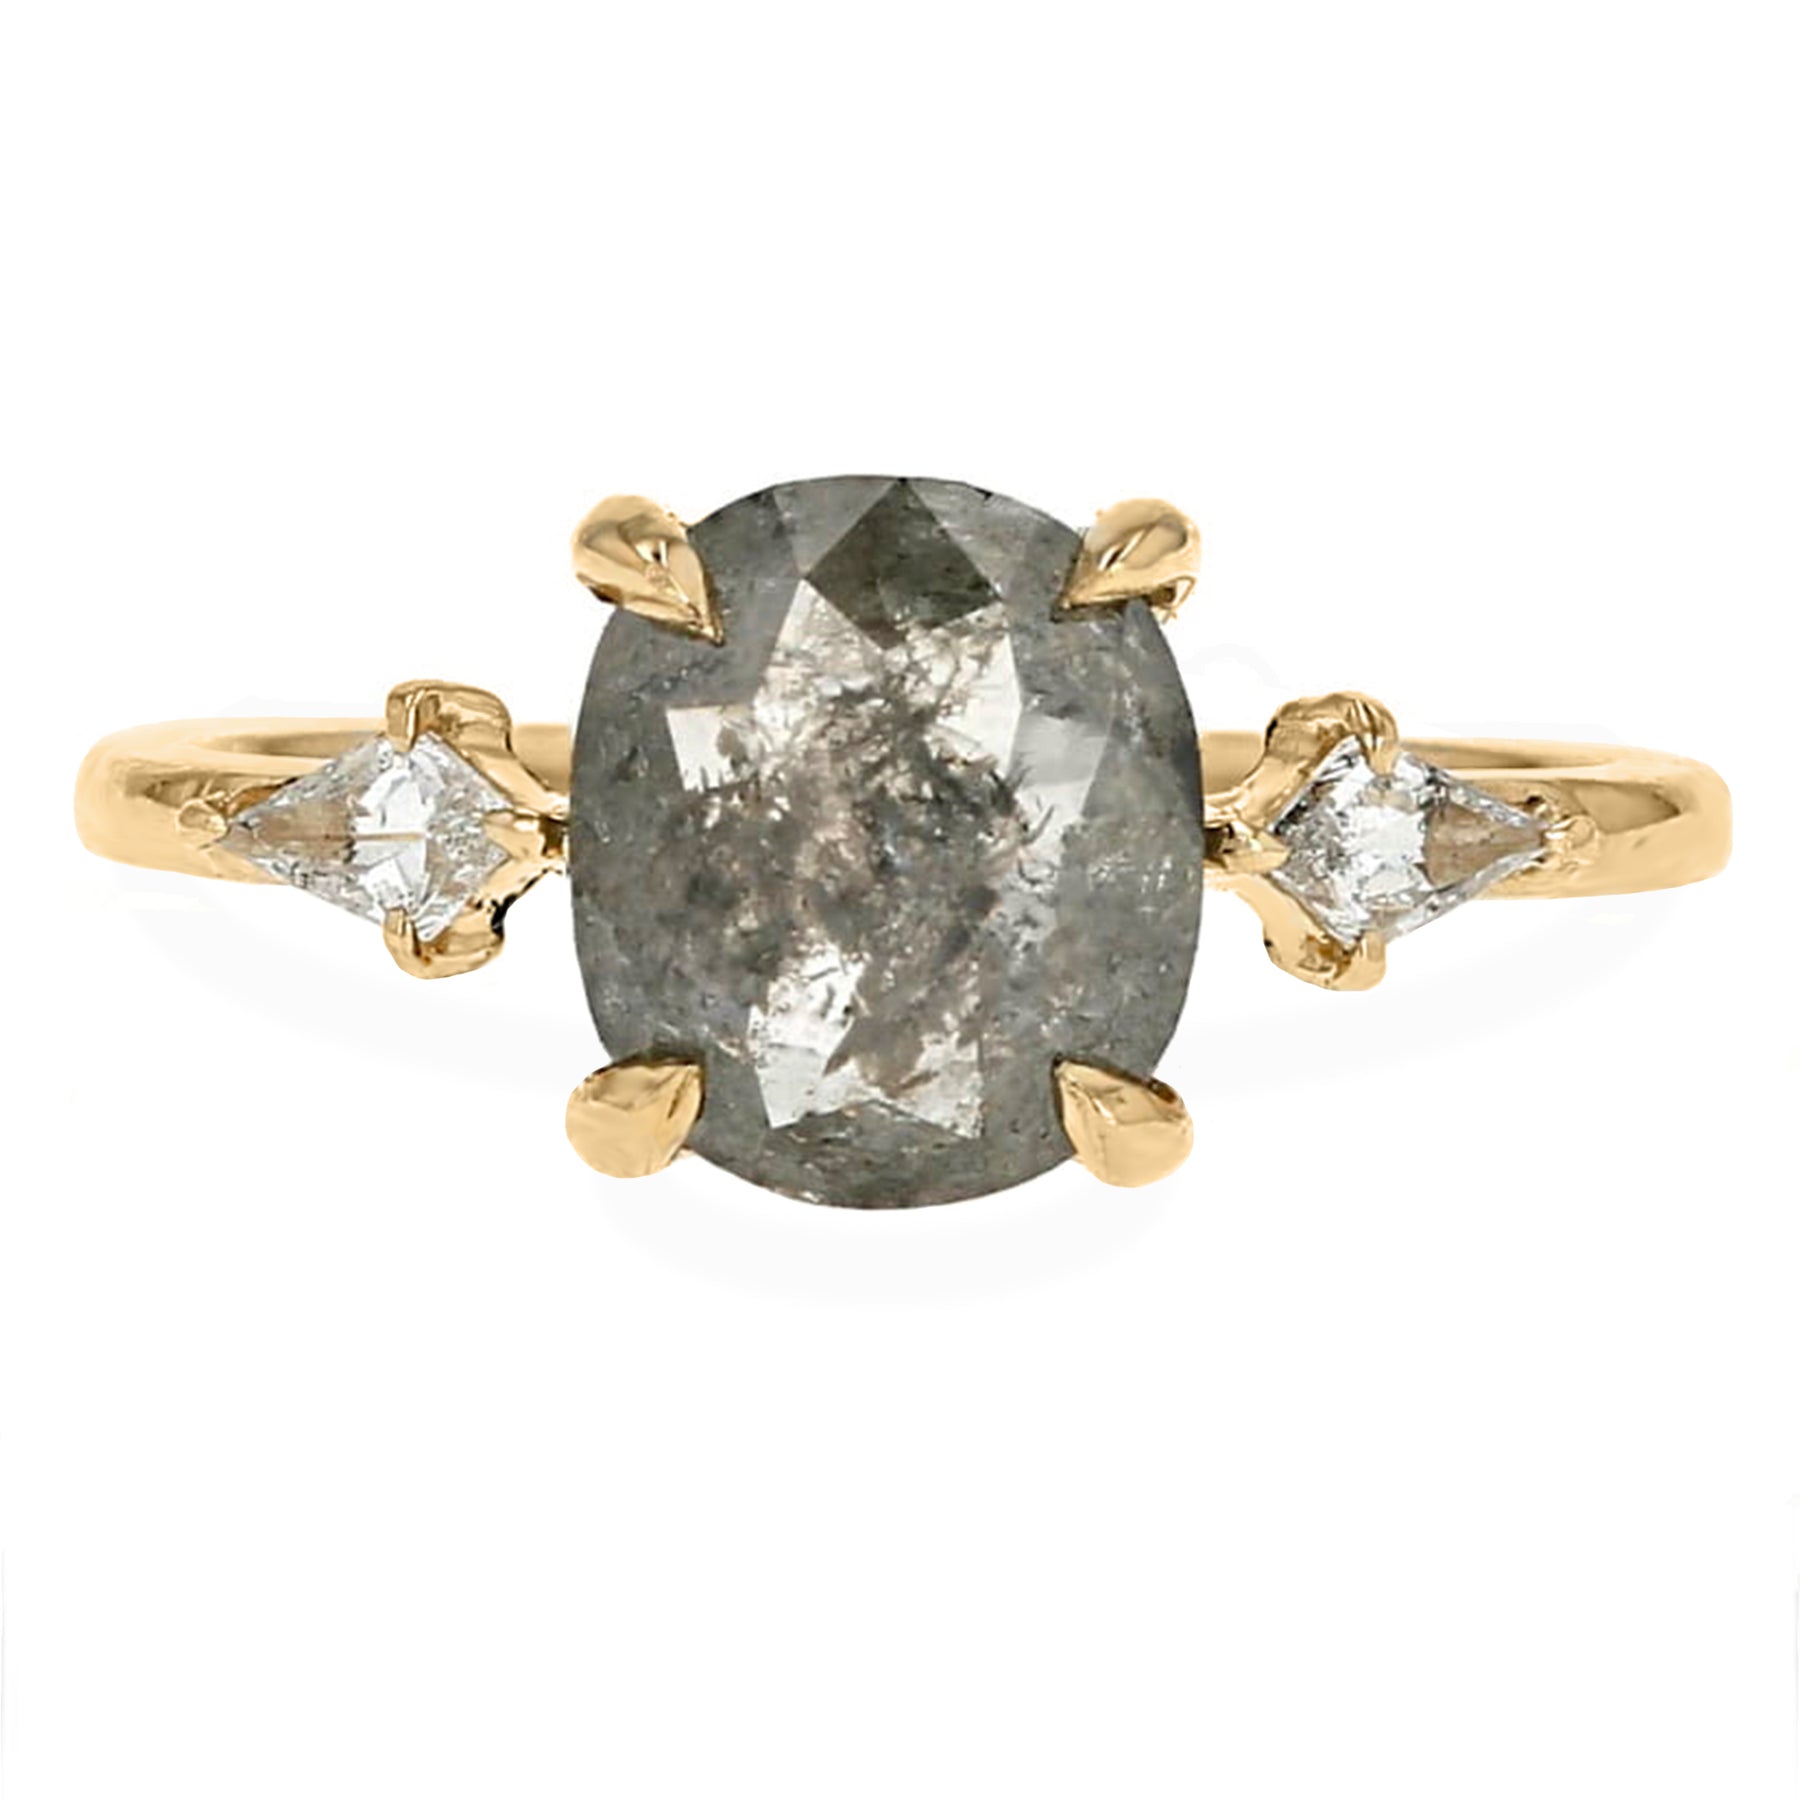 1.99ct rose cut cushion cut gray diamond engagement ring four prongs with kite shape diamond side stones 14k yellow gold